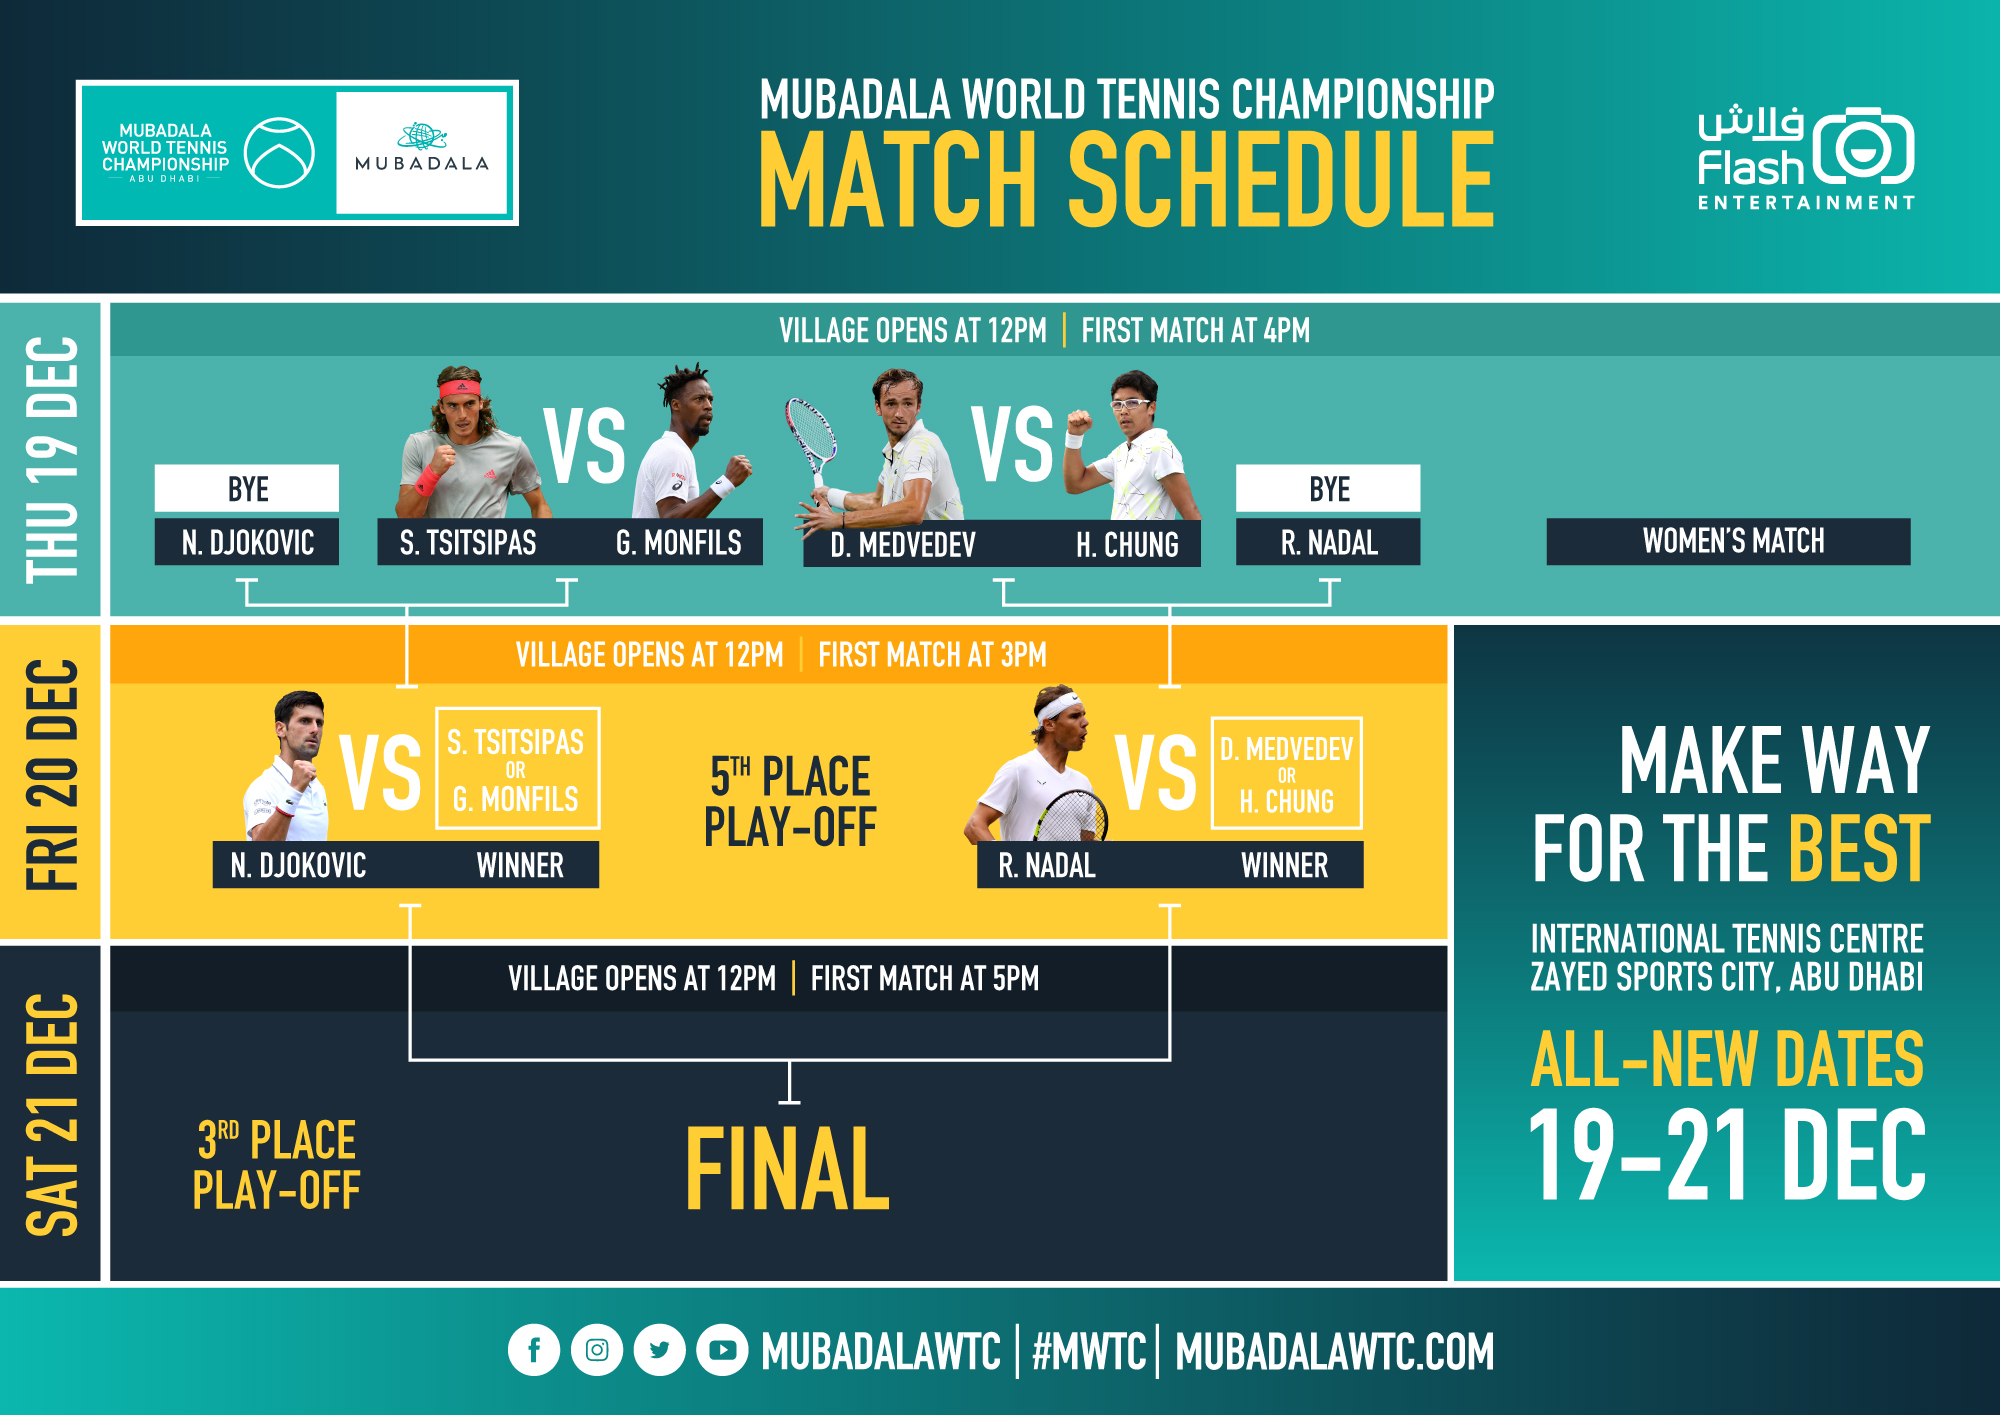 “The Best” Mubadala World Tennis Championship Draw Revealed